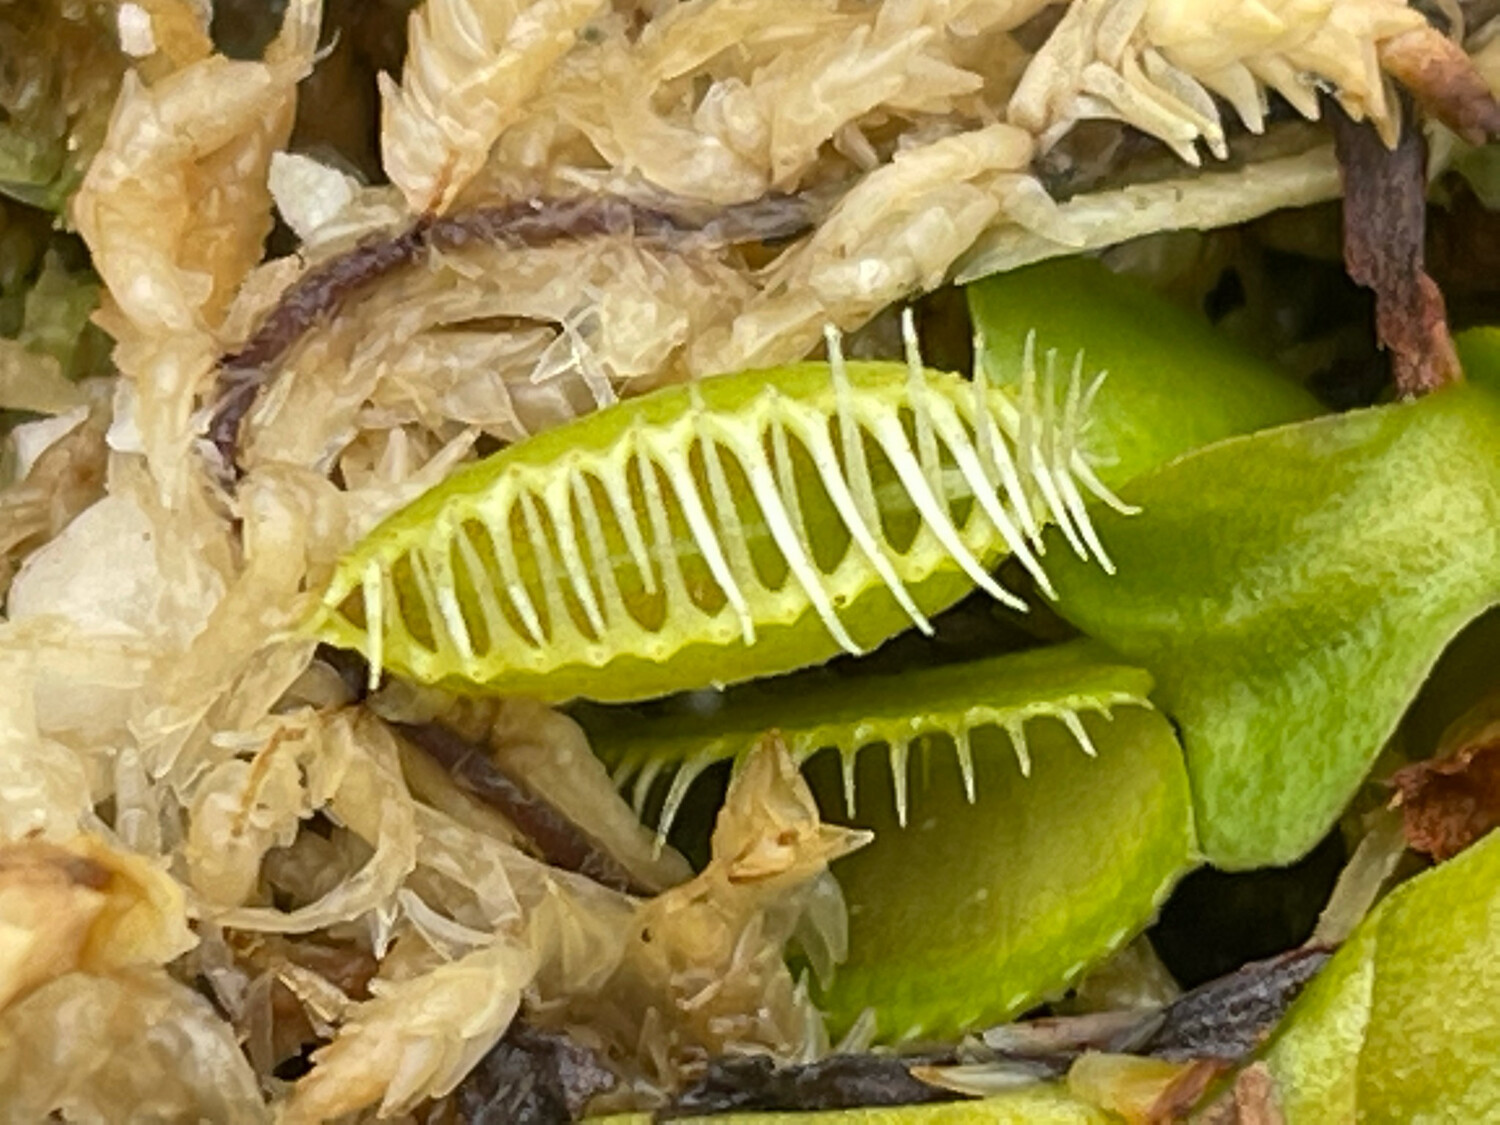 Dionaea muscipula  “Rabbit Teeth” Venus Flytrap (small)